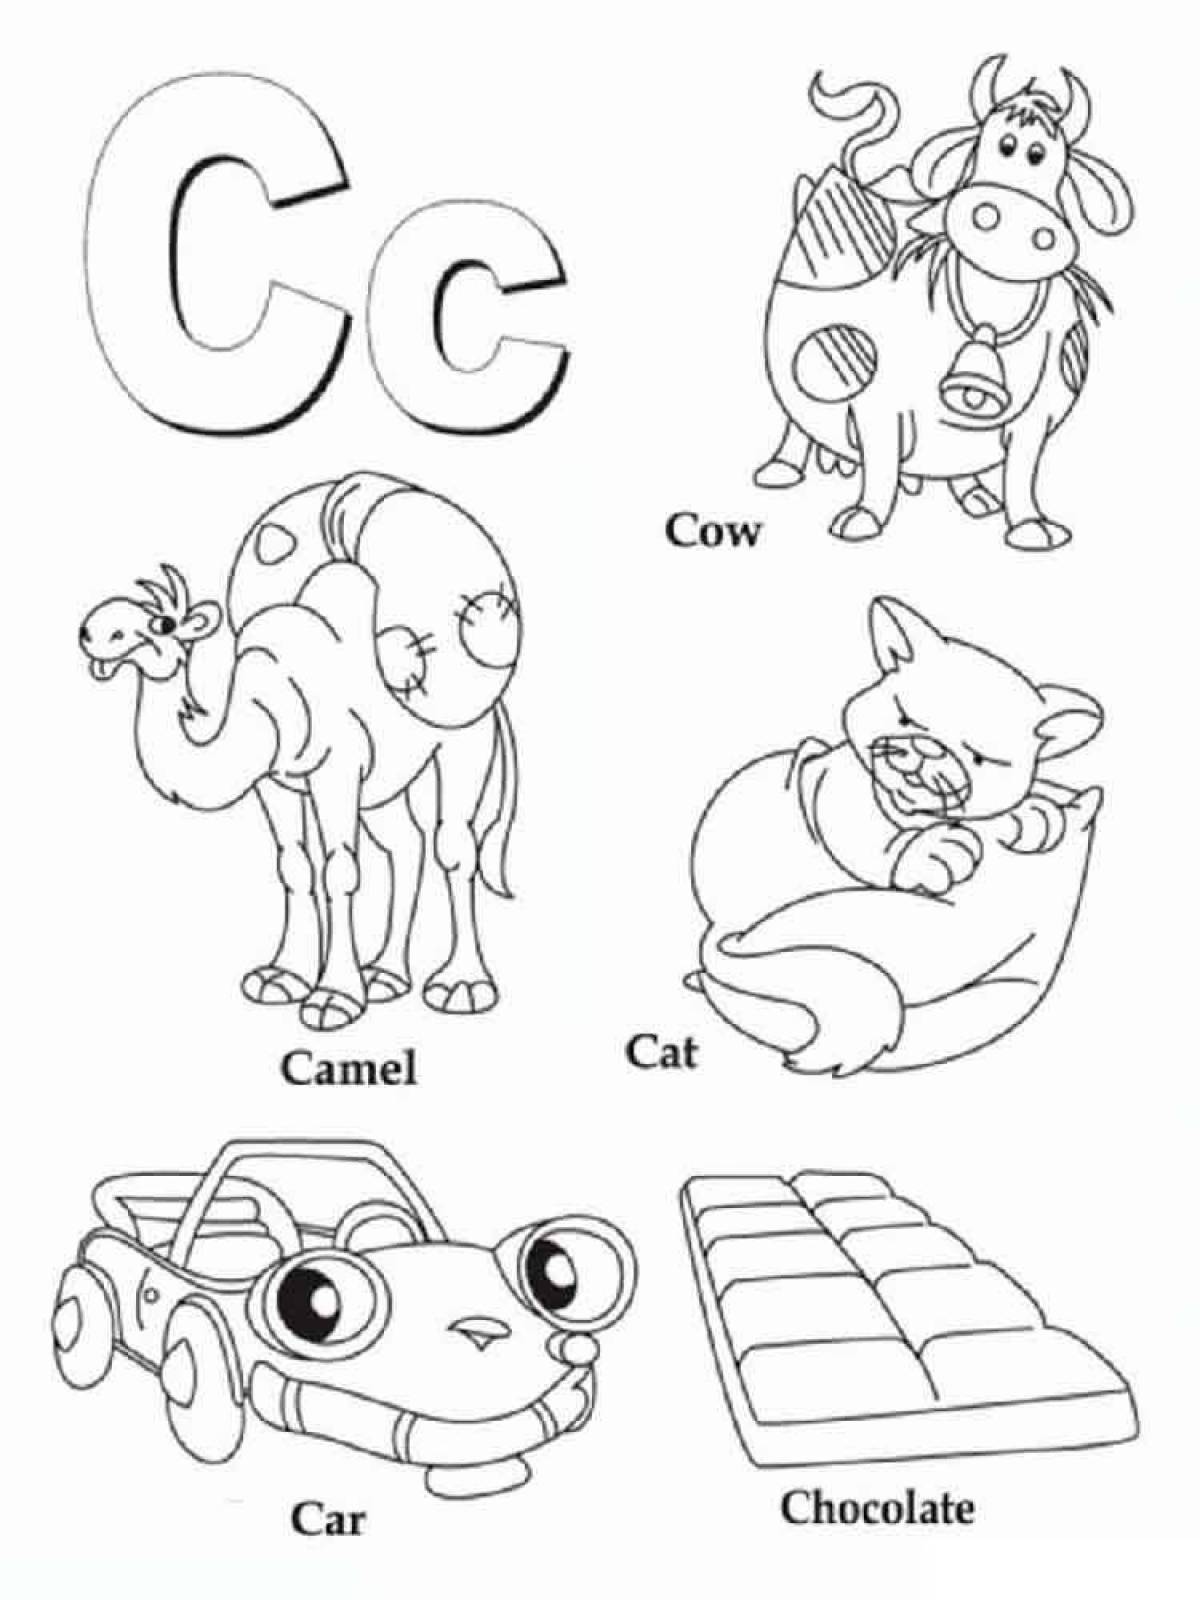 Magic english alphabet coloring page